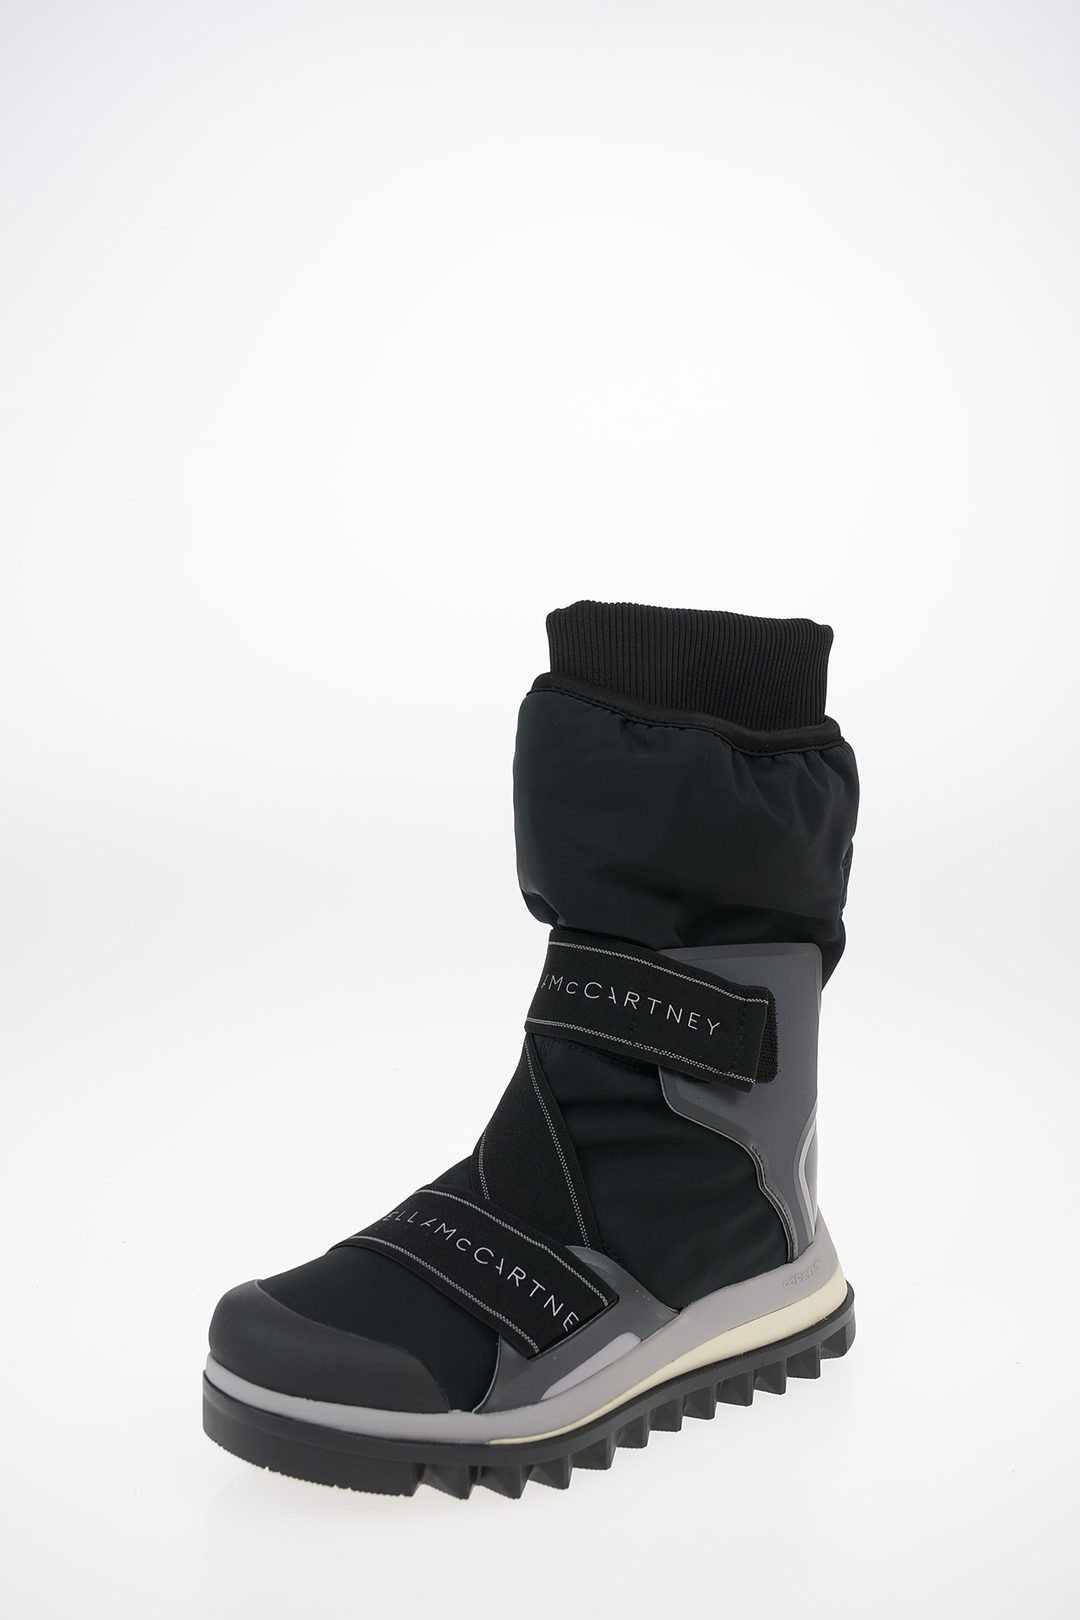 Adidas McCARTNEY Nylon WINTERBOOT Ankle Boot women - Glamood Outlet